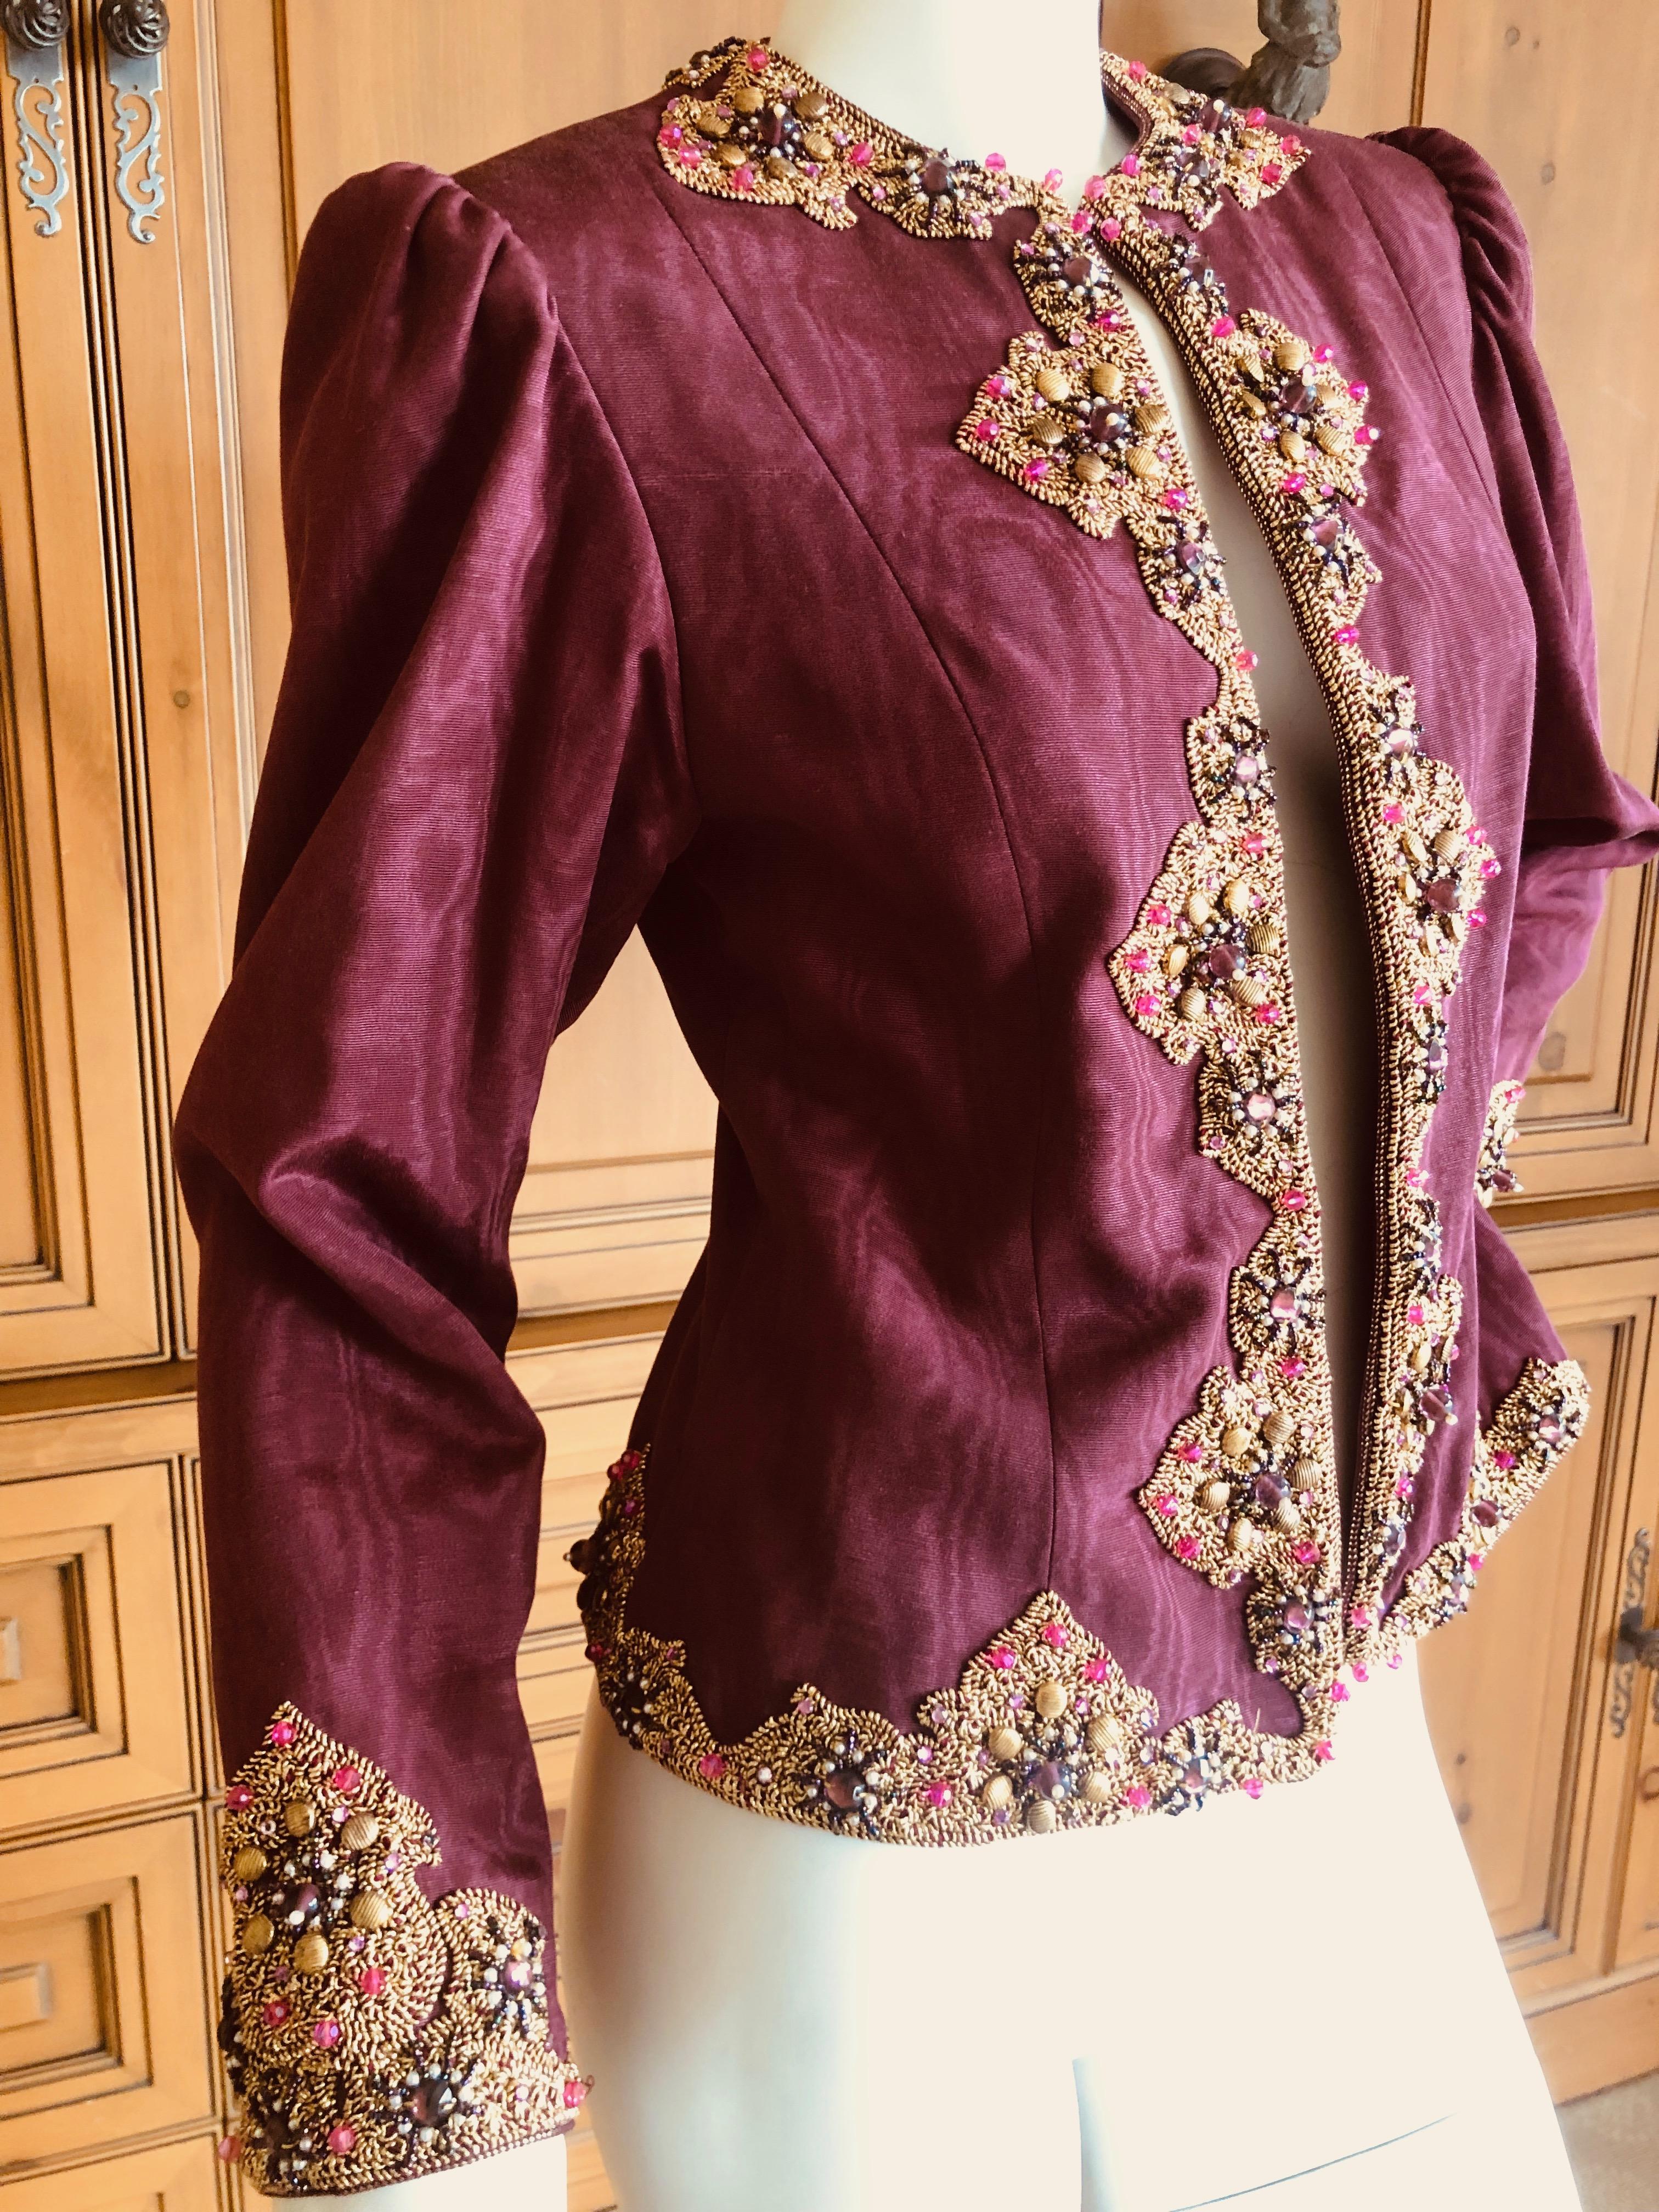 Women's Oscar de la Renta 1970's Moire Silk Evening Jacket with Arabesque Embellishments For Sale